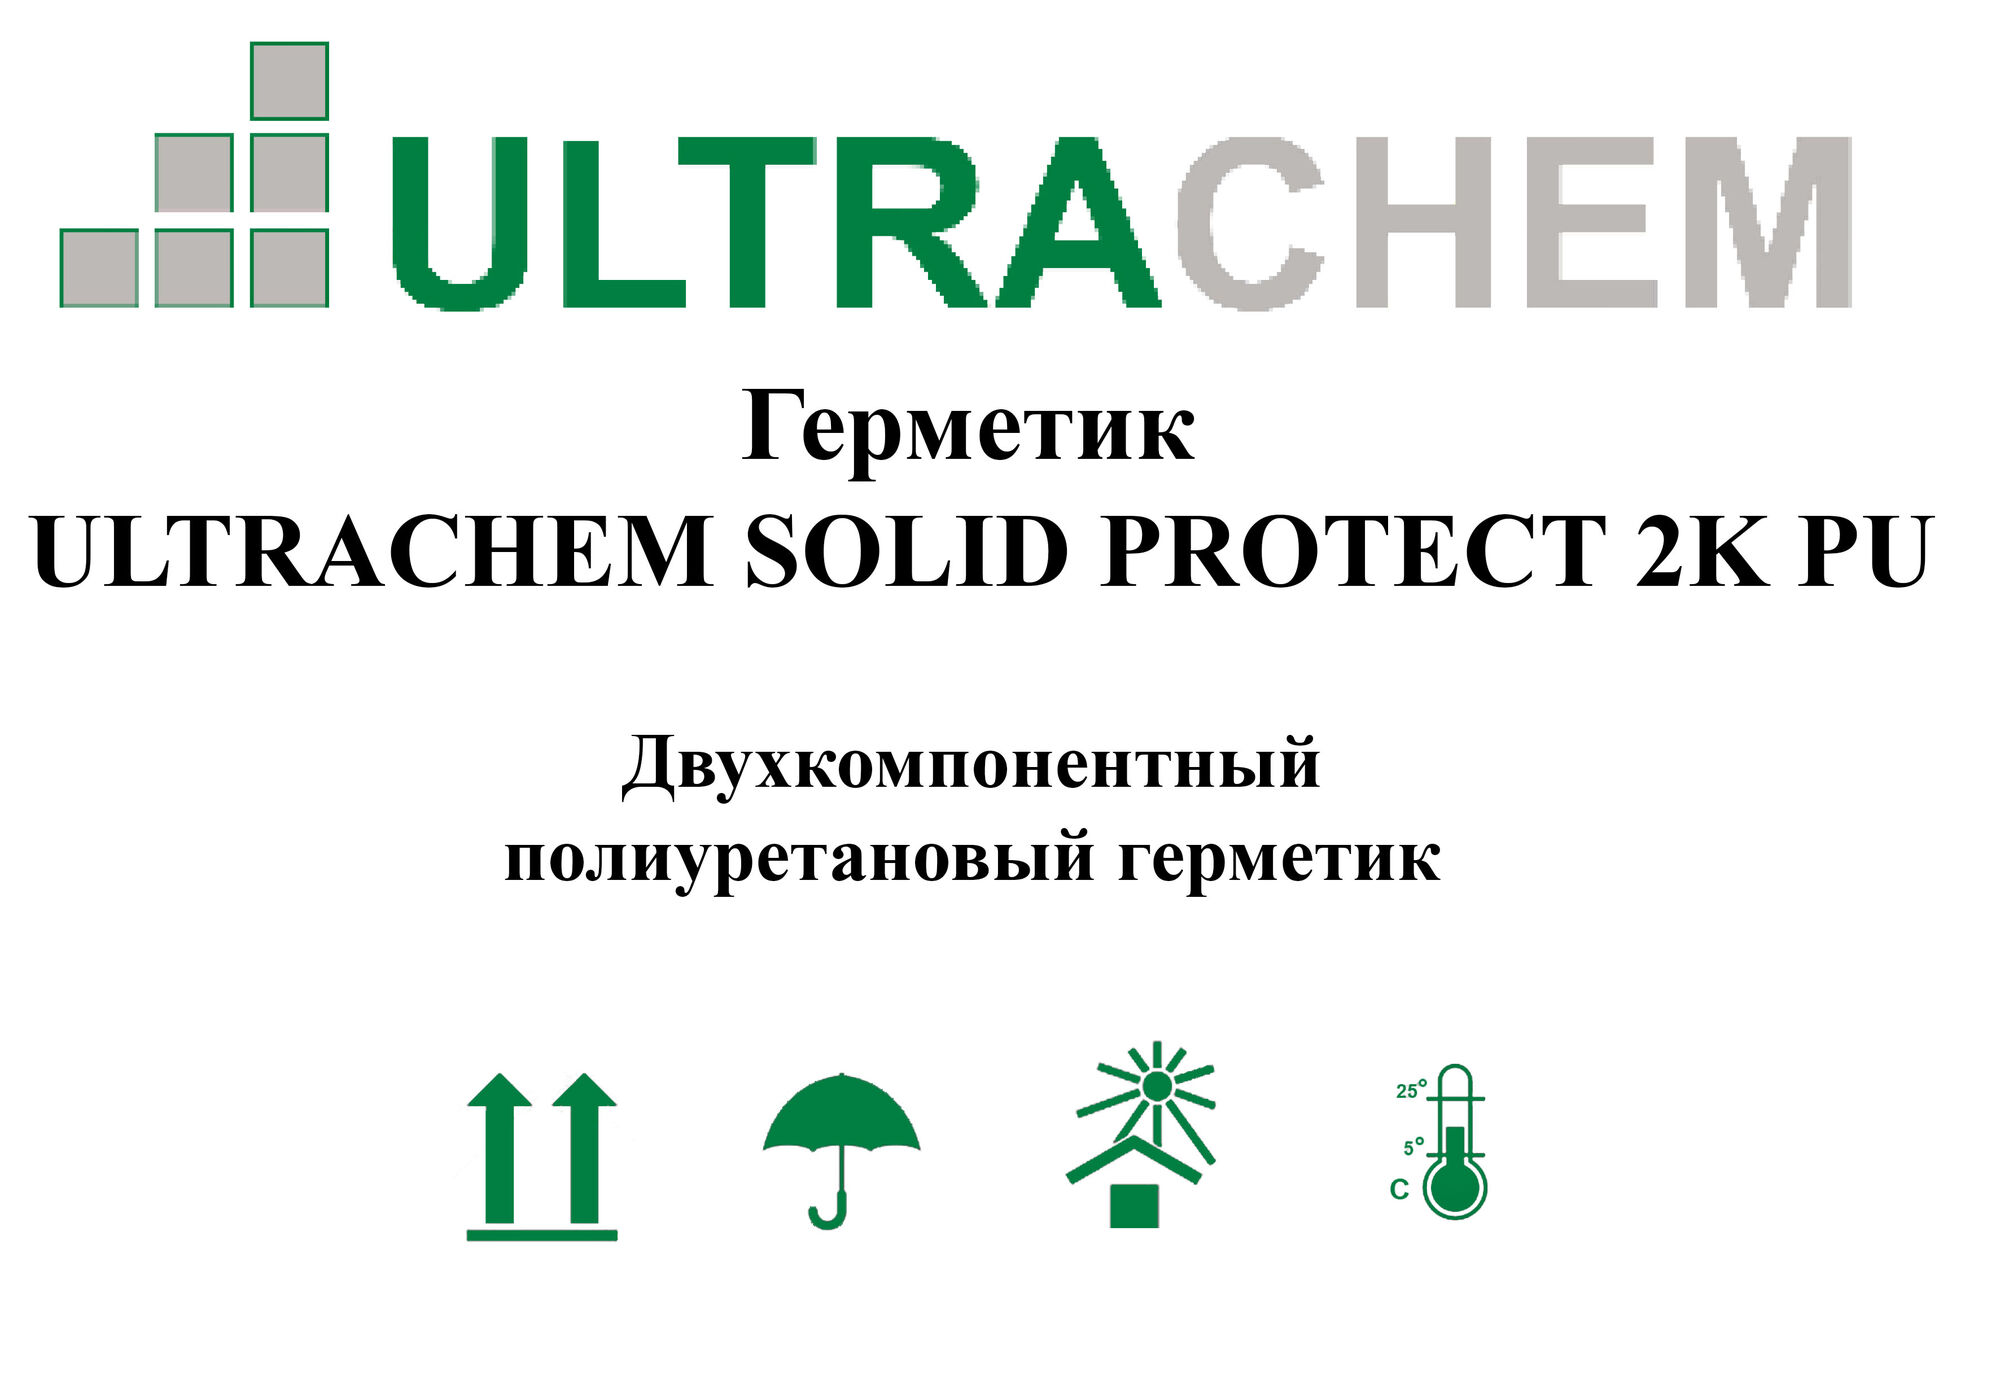 Герметик ULTRACHEM SOLID PROTECT 2K PU